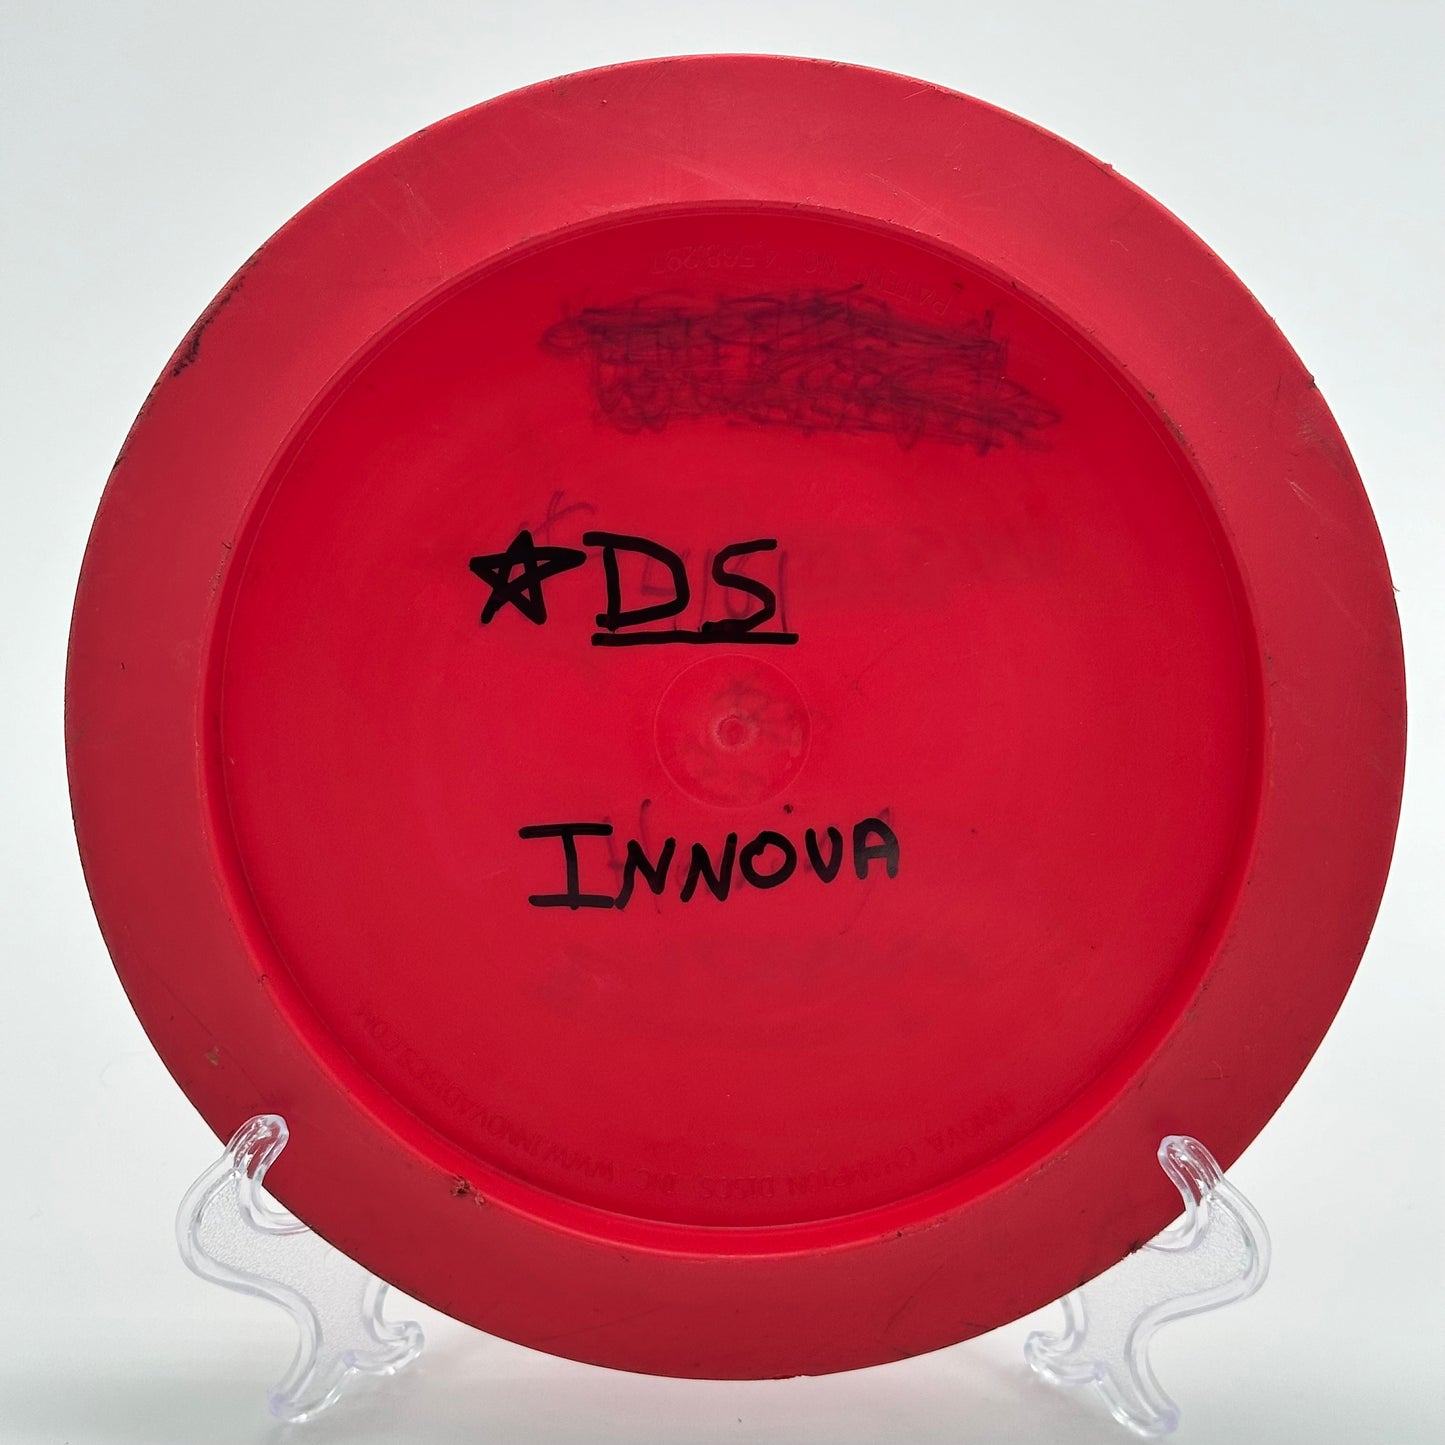 Innova Destroyer | Star *DS PFN Patent #